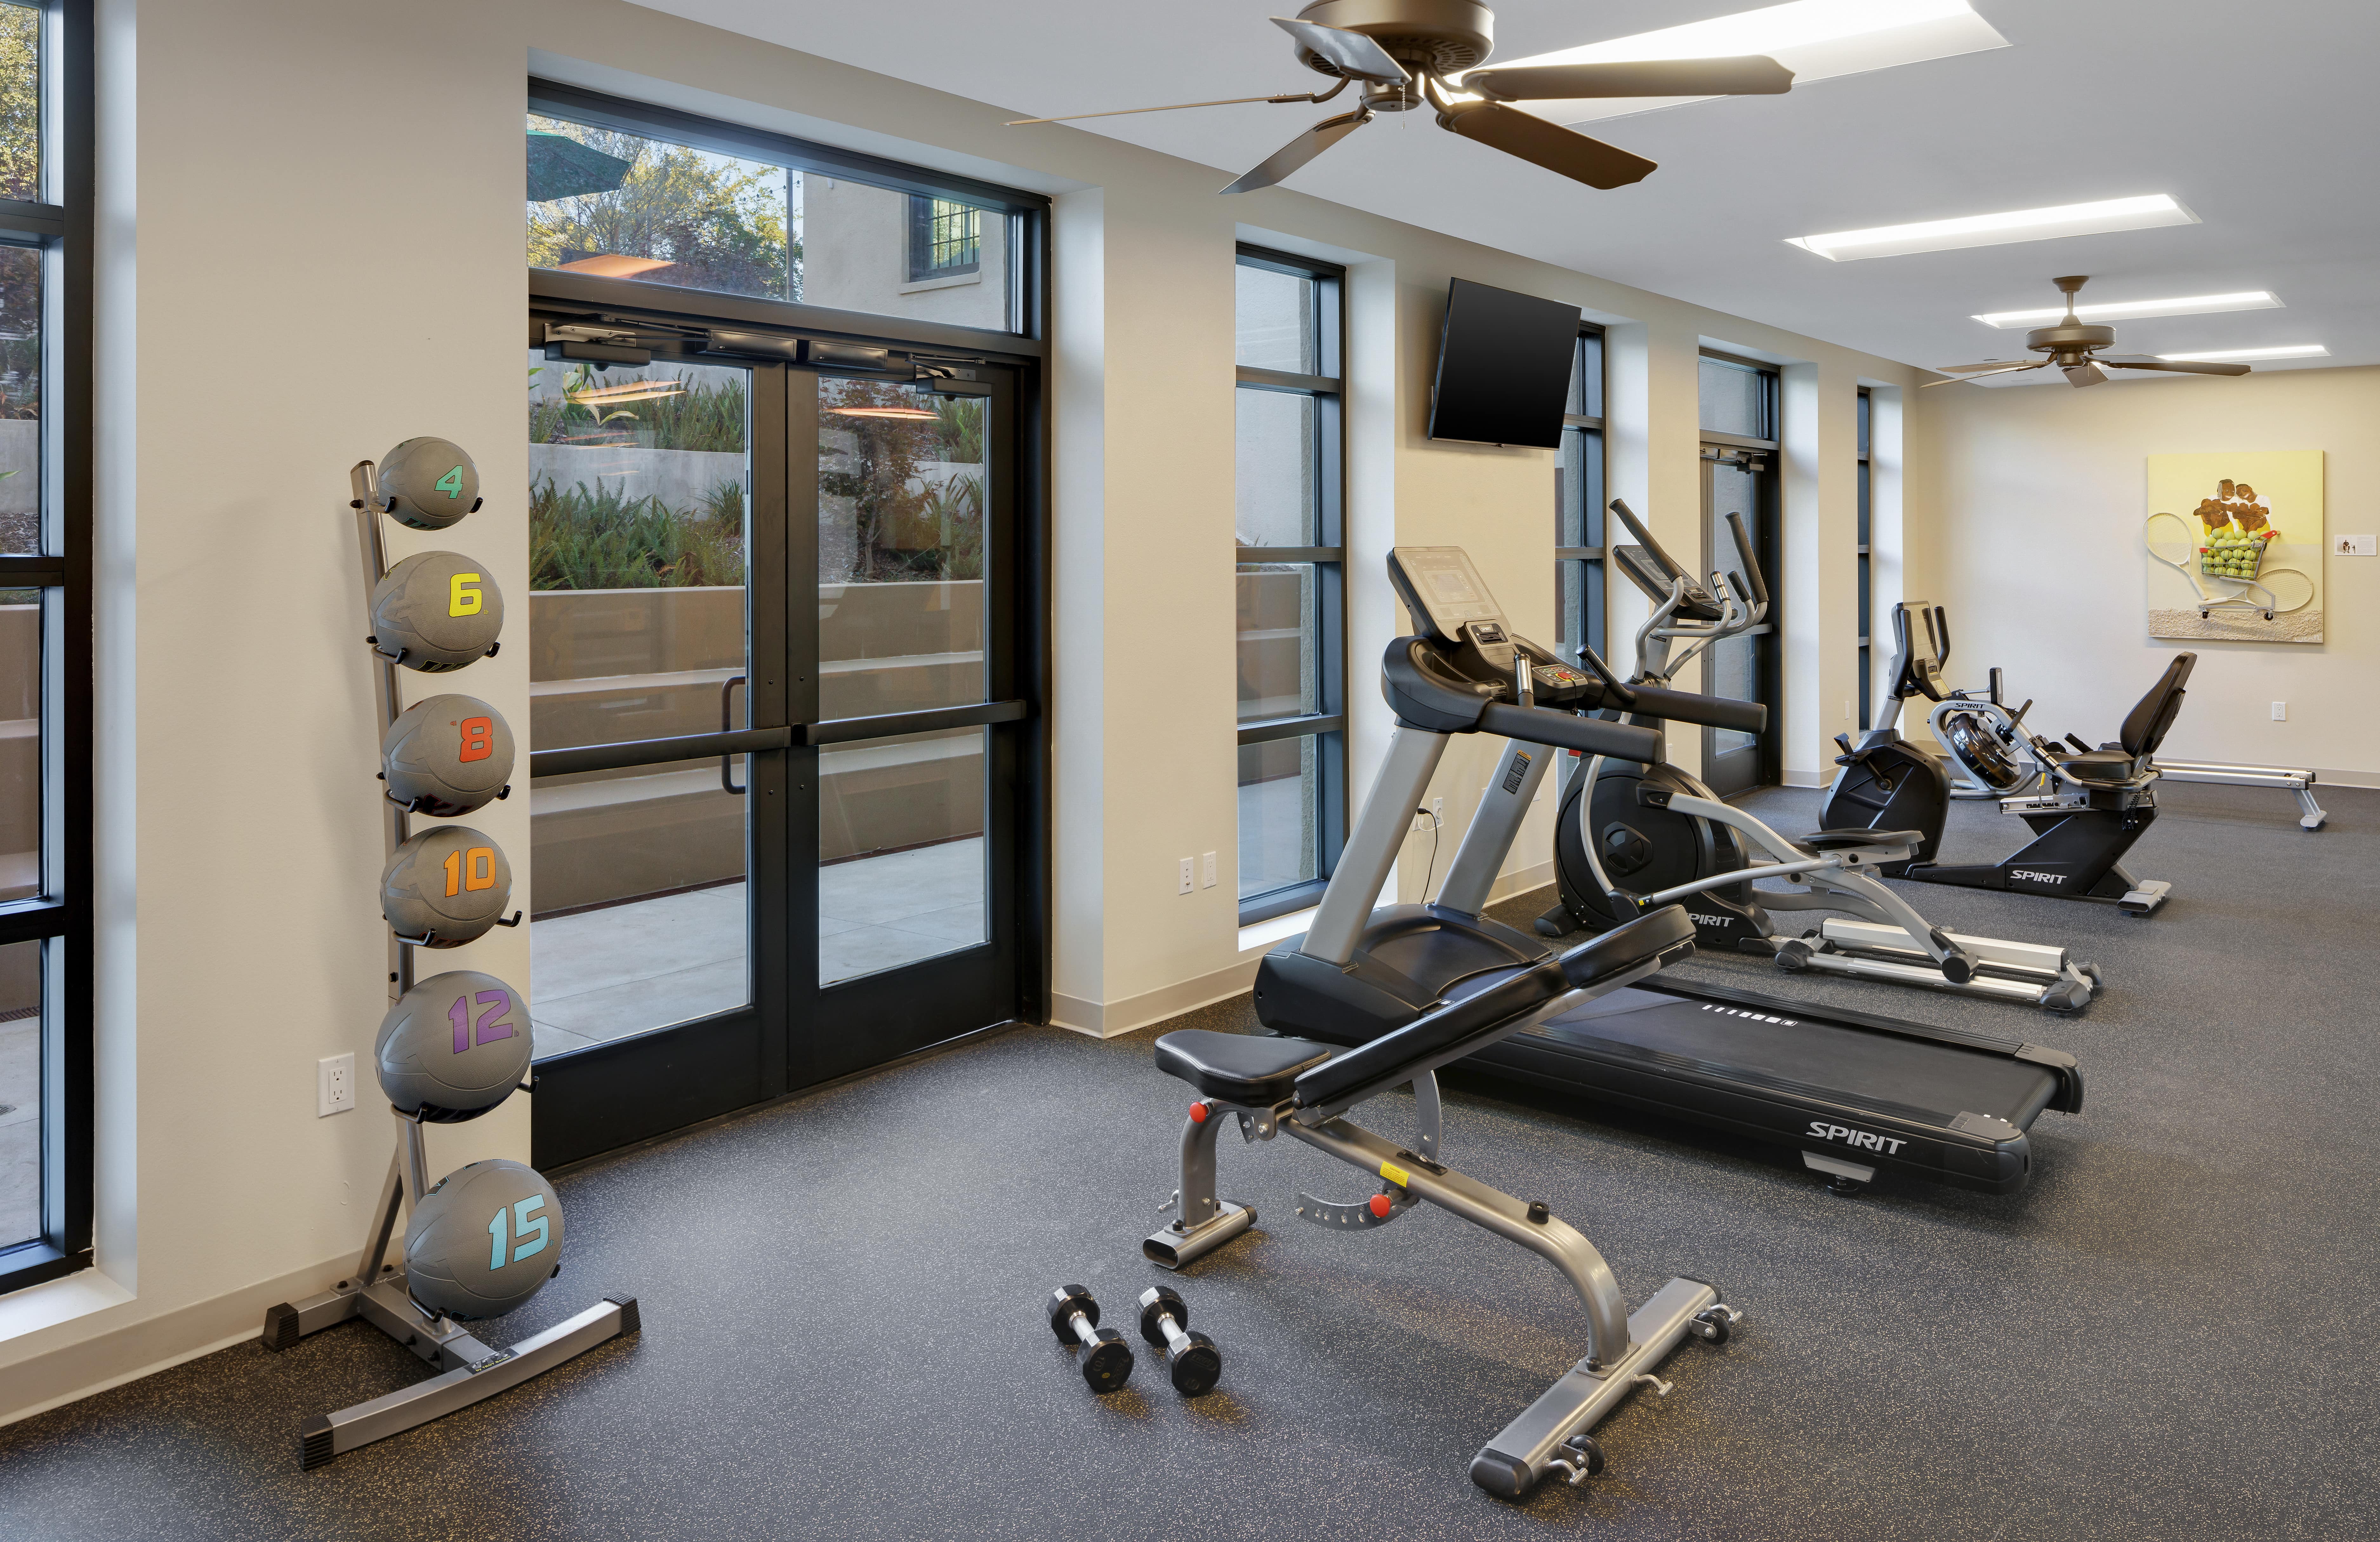 Fitness room with treadmills and medicine balls